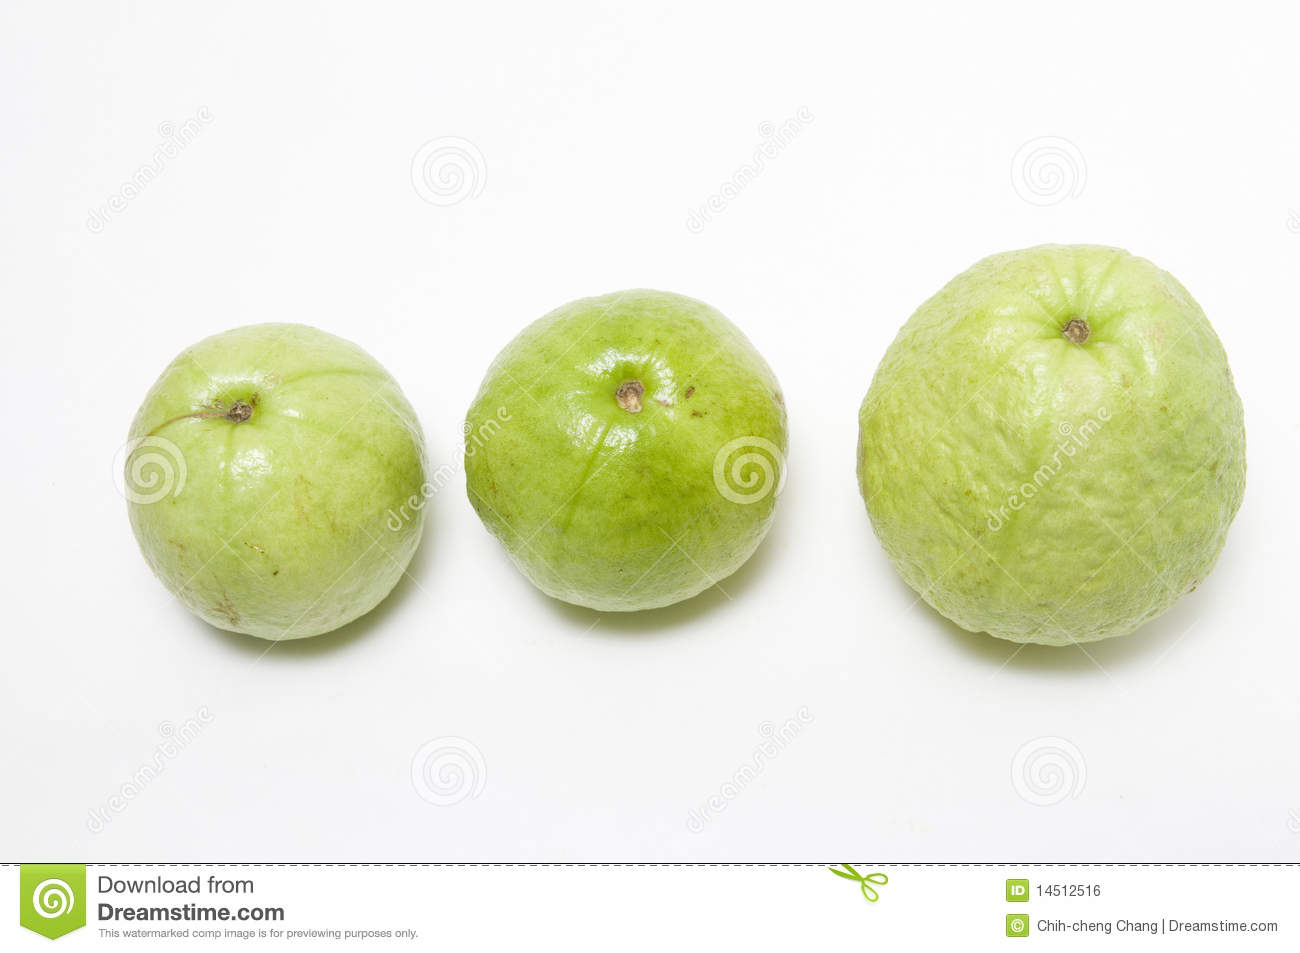 Guava Royalty Free Stock Image   Image  14512516